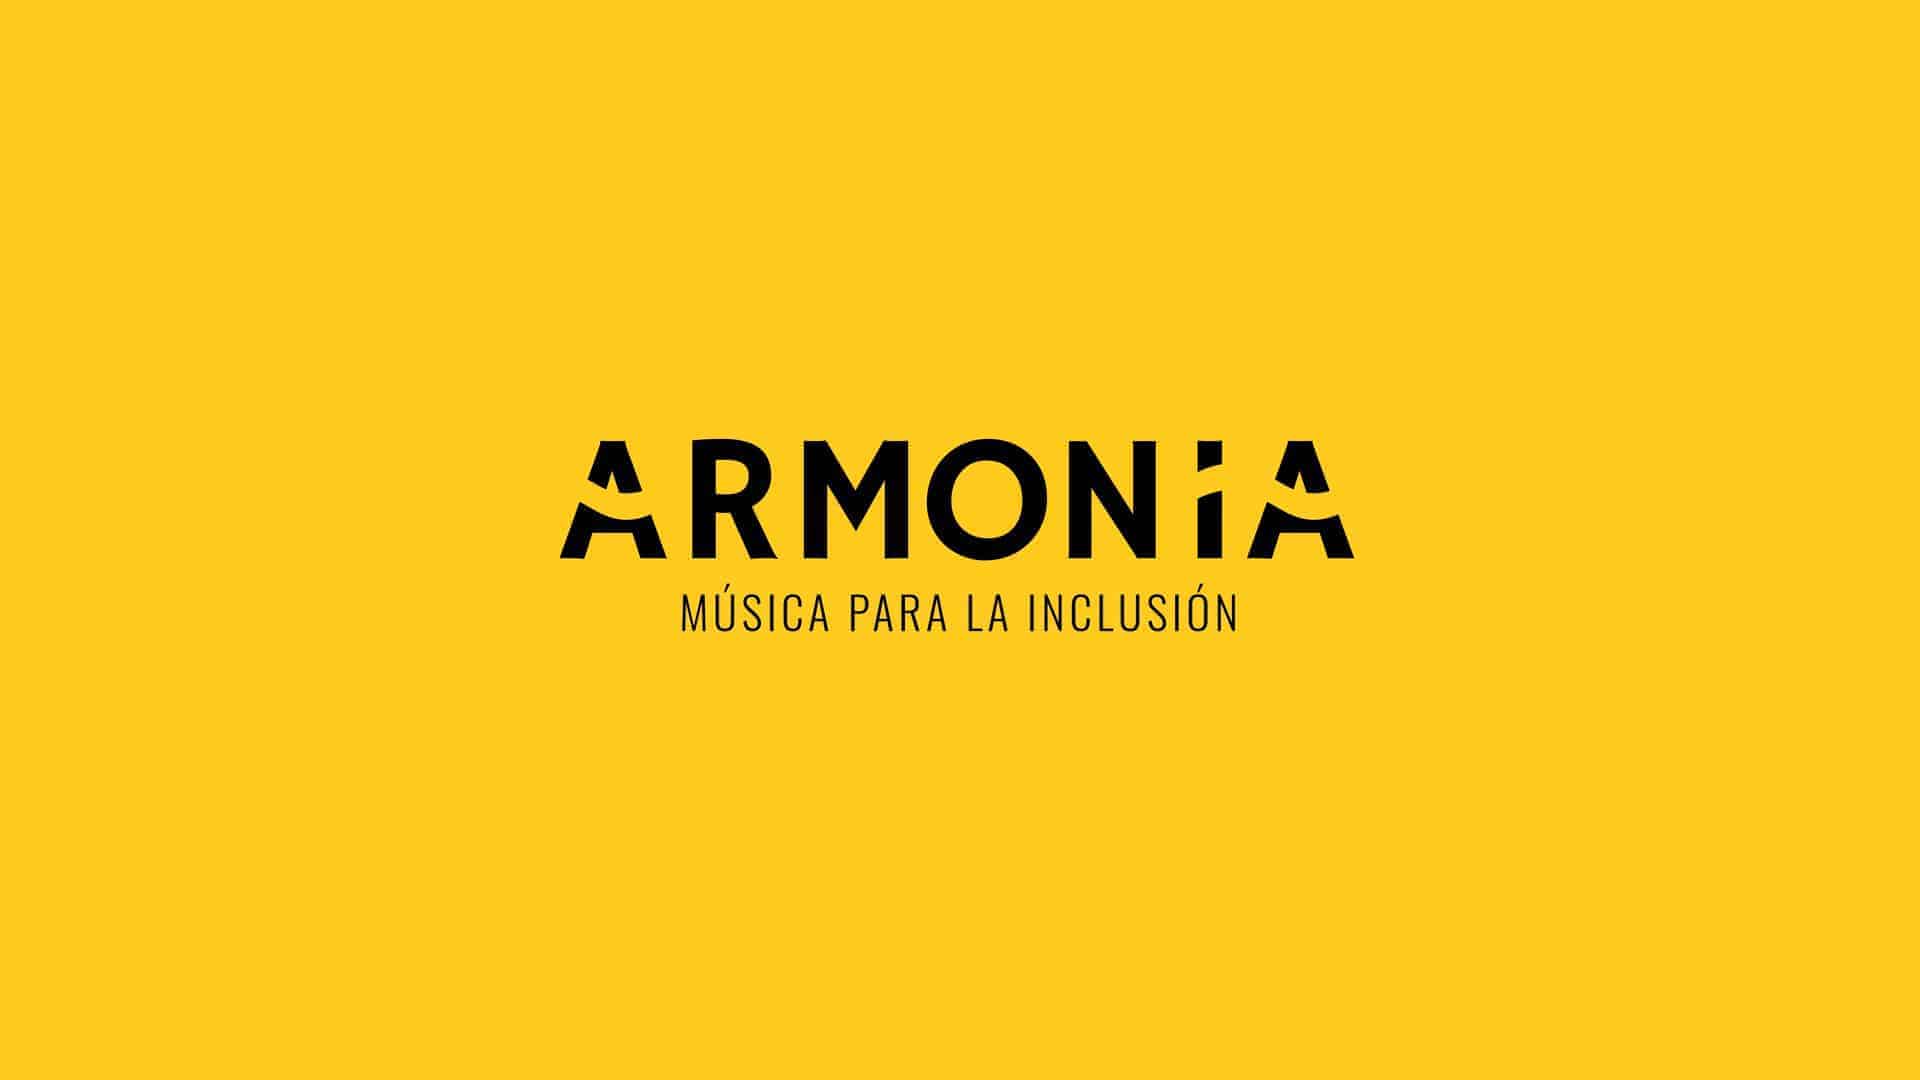 Armonía - Music for Inclusion